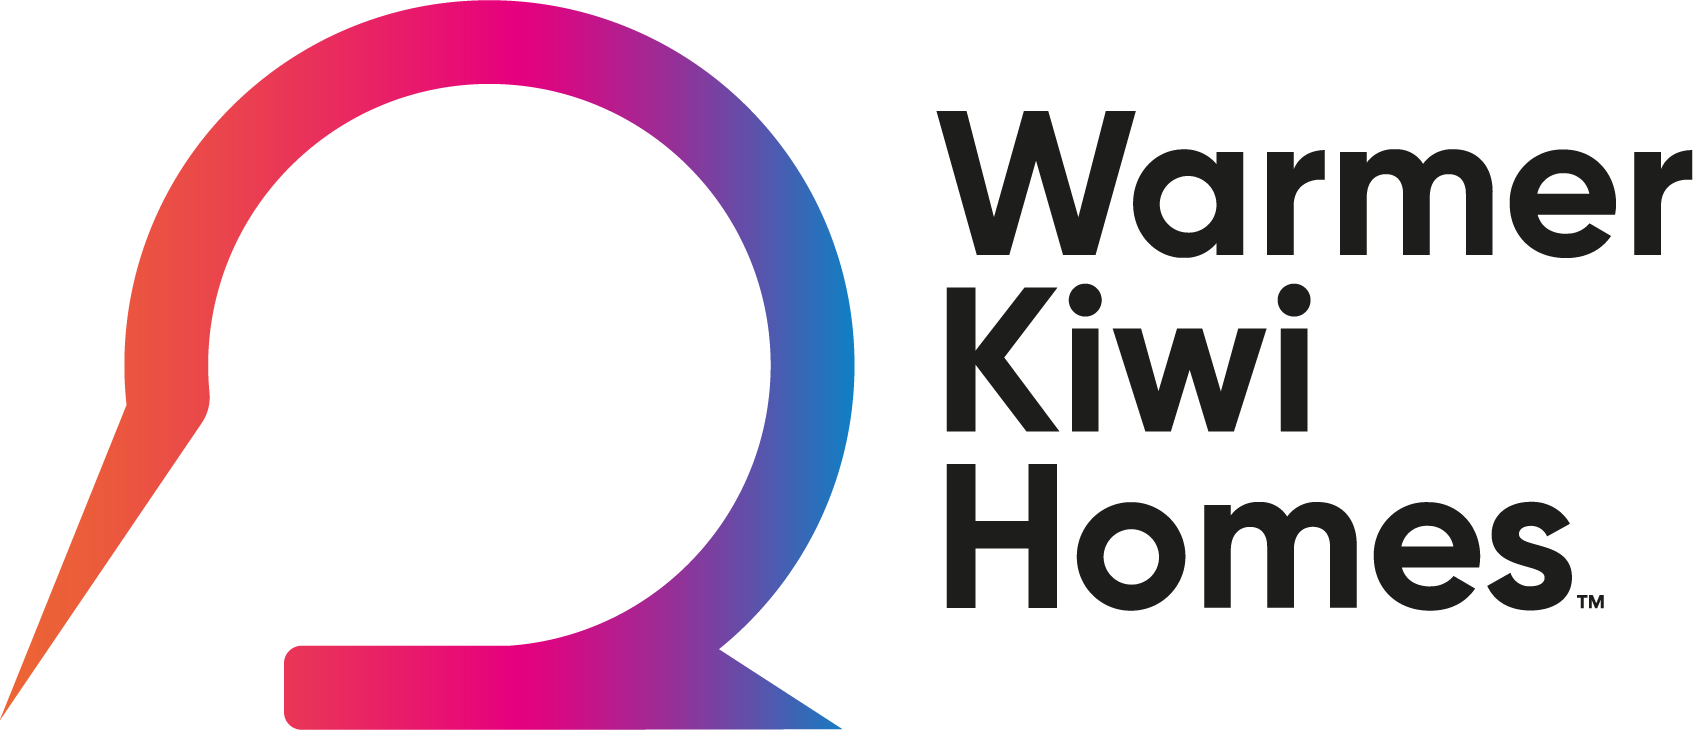 Warmer Kiwi Homes. 